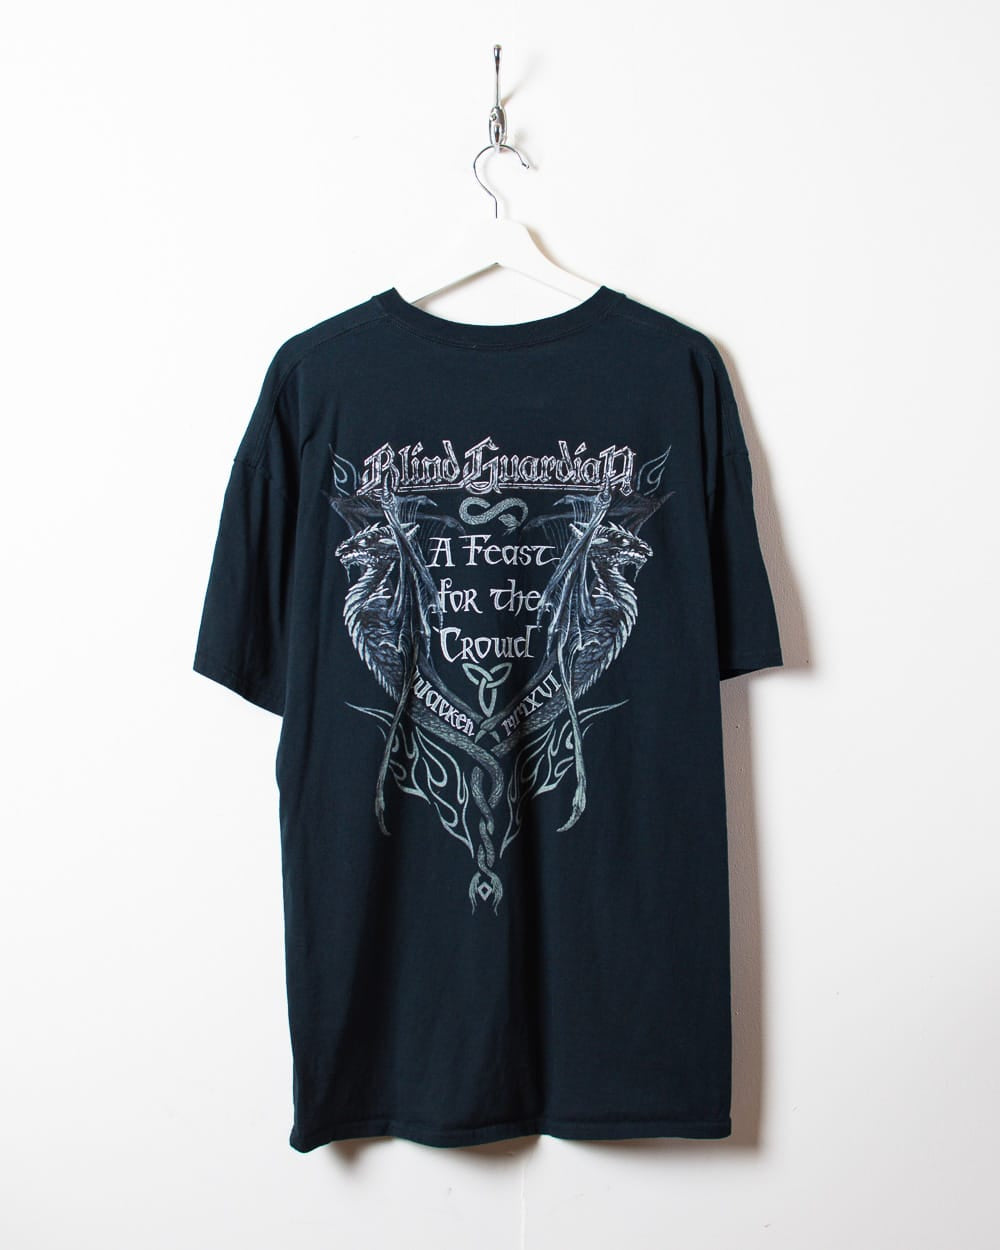 Black Blind Guardian T-Shirt - XX-Large